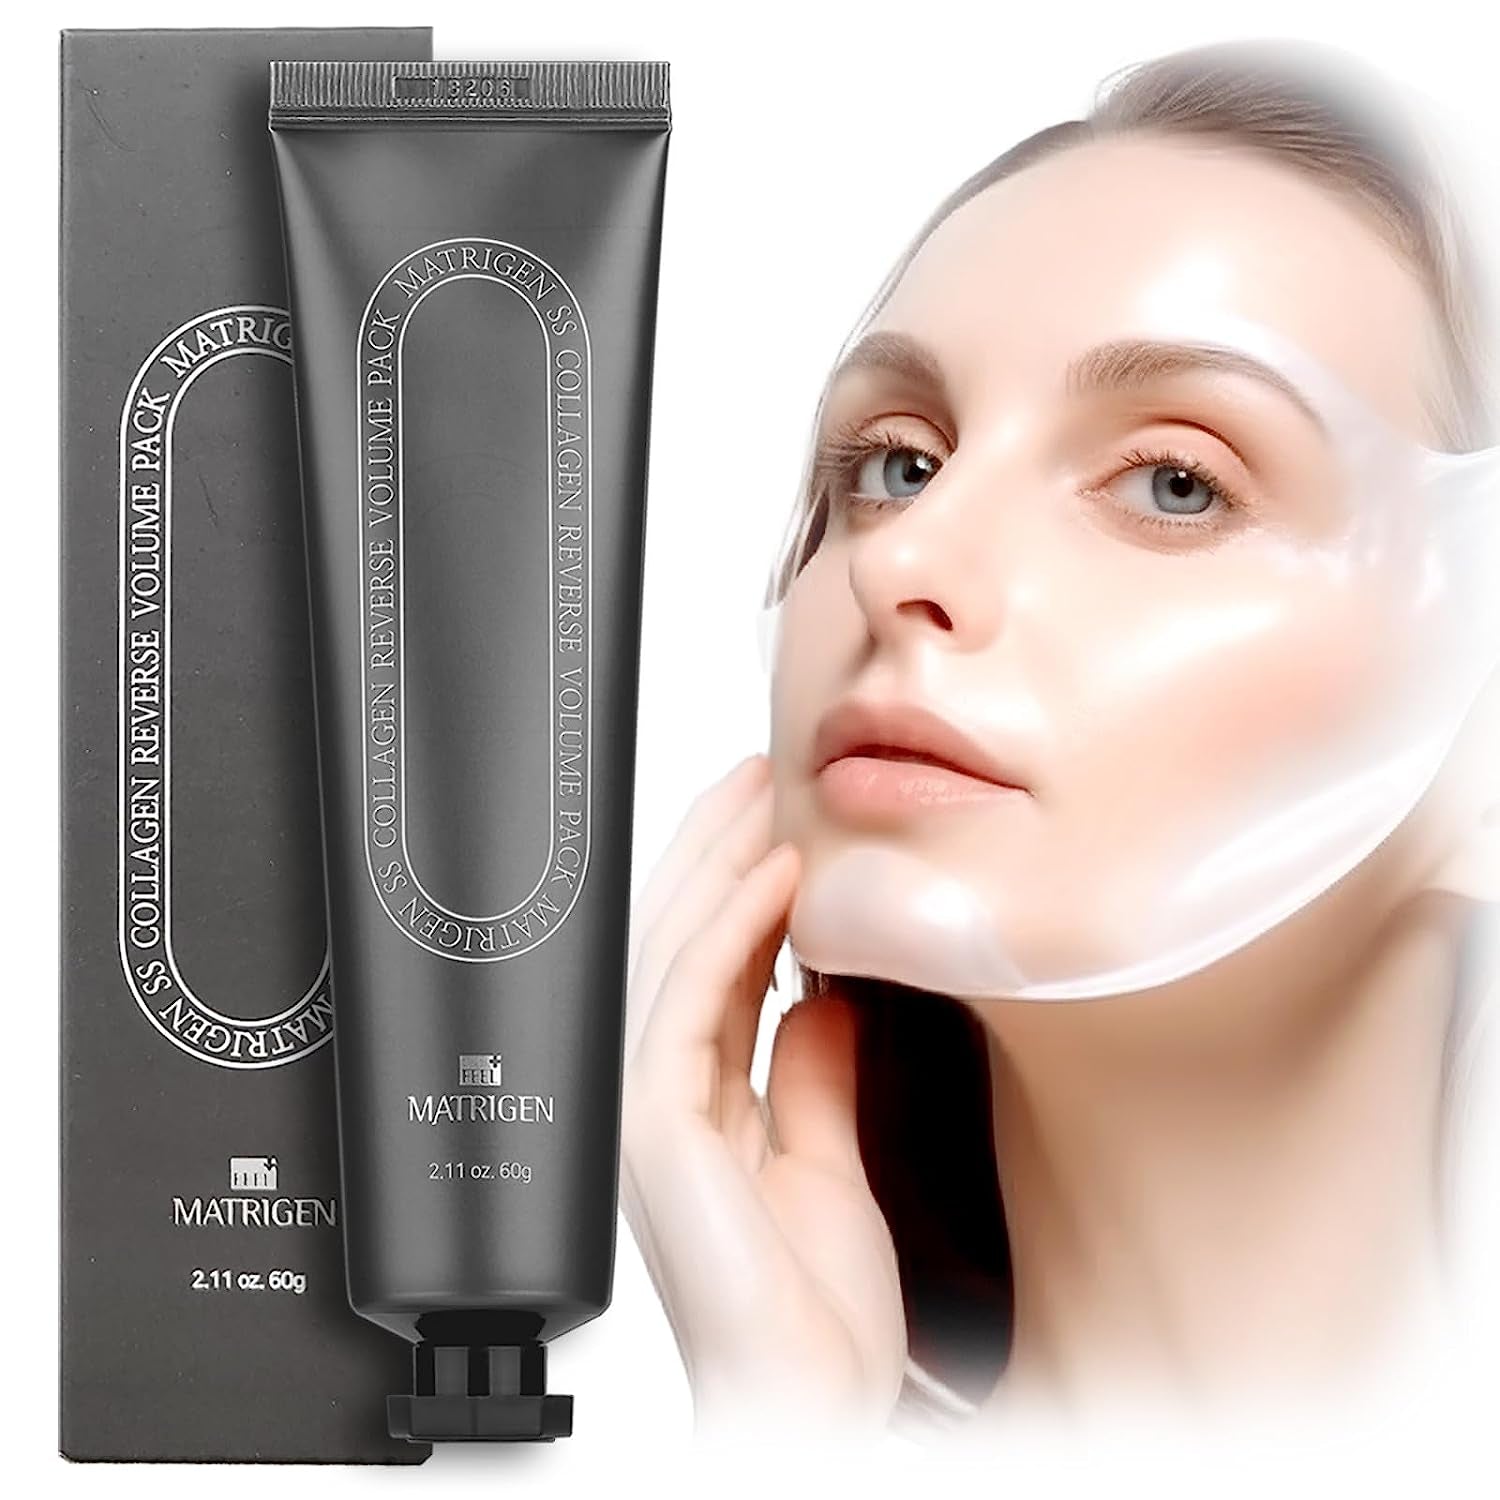 SS Collagen Reverse Film Volume Peel off Face Mask Pack, Hydrolyzed Collagen 380 Dalton anti Aging Wrinkles Plumping Dark Circles Hypoallergenic, K-Beauty Sleeping Mask